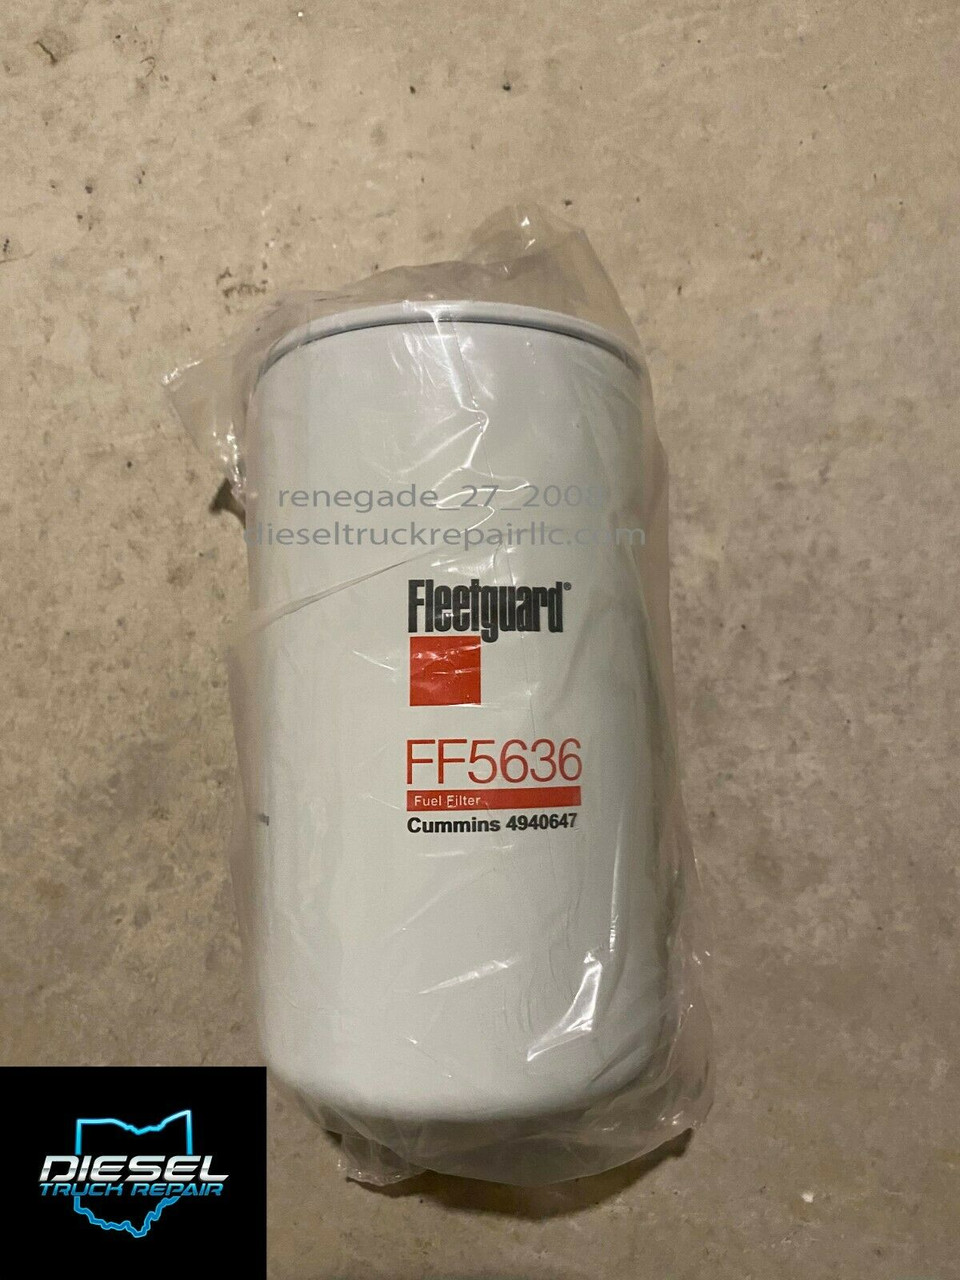 FF5636 fuel filter